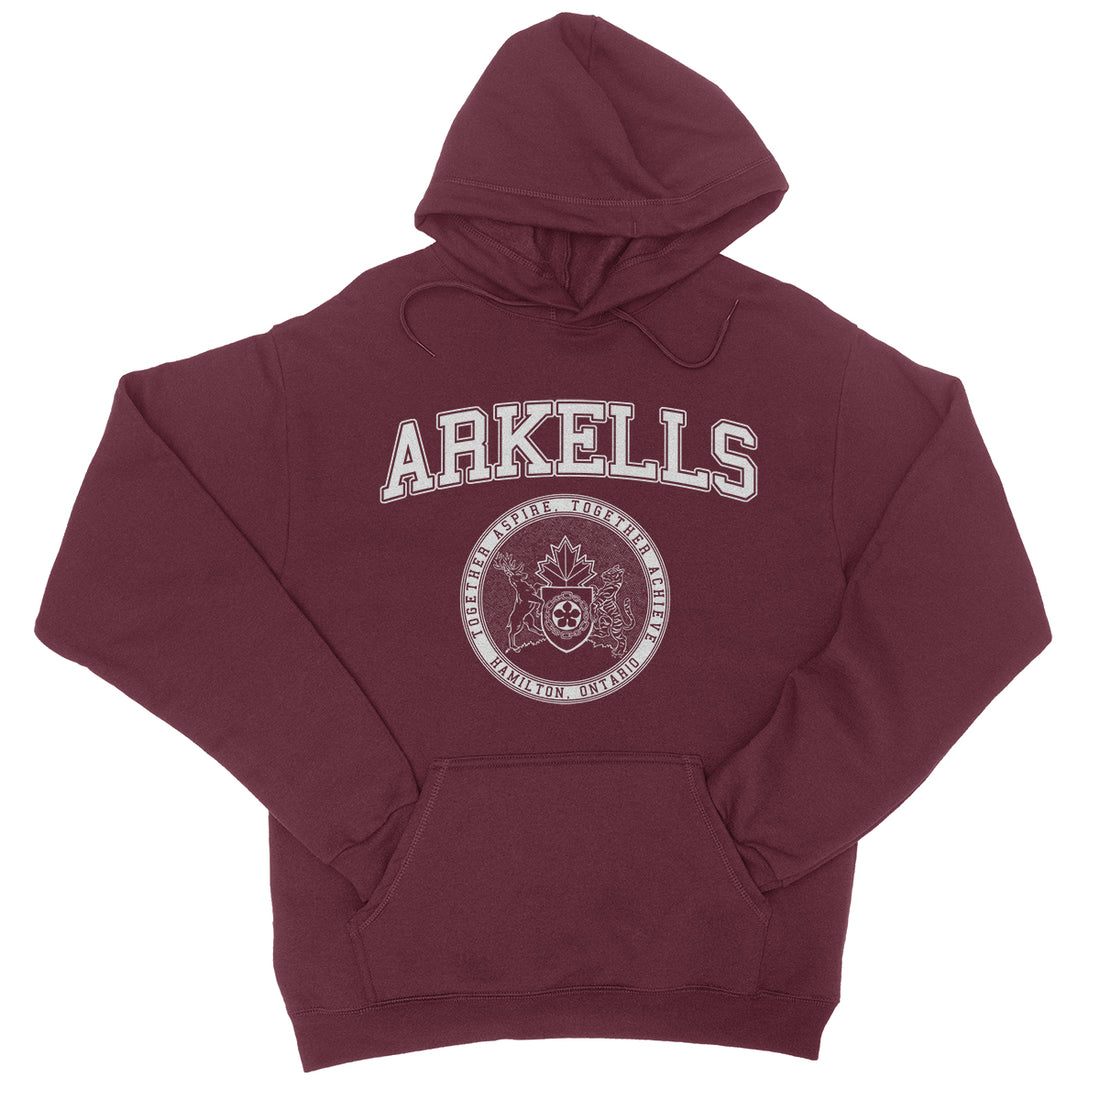 Arkells - Varsity - Pullover Hoodie - Maroon